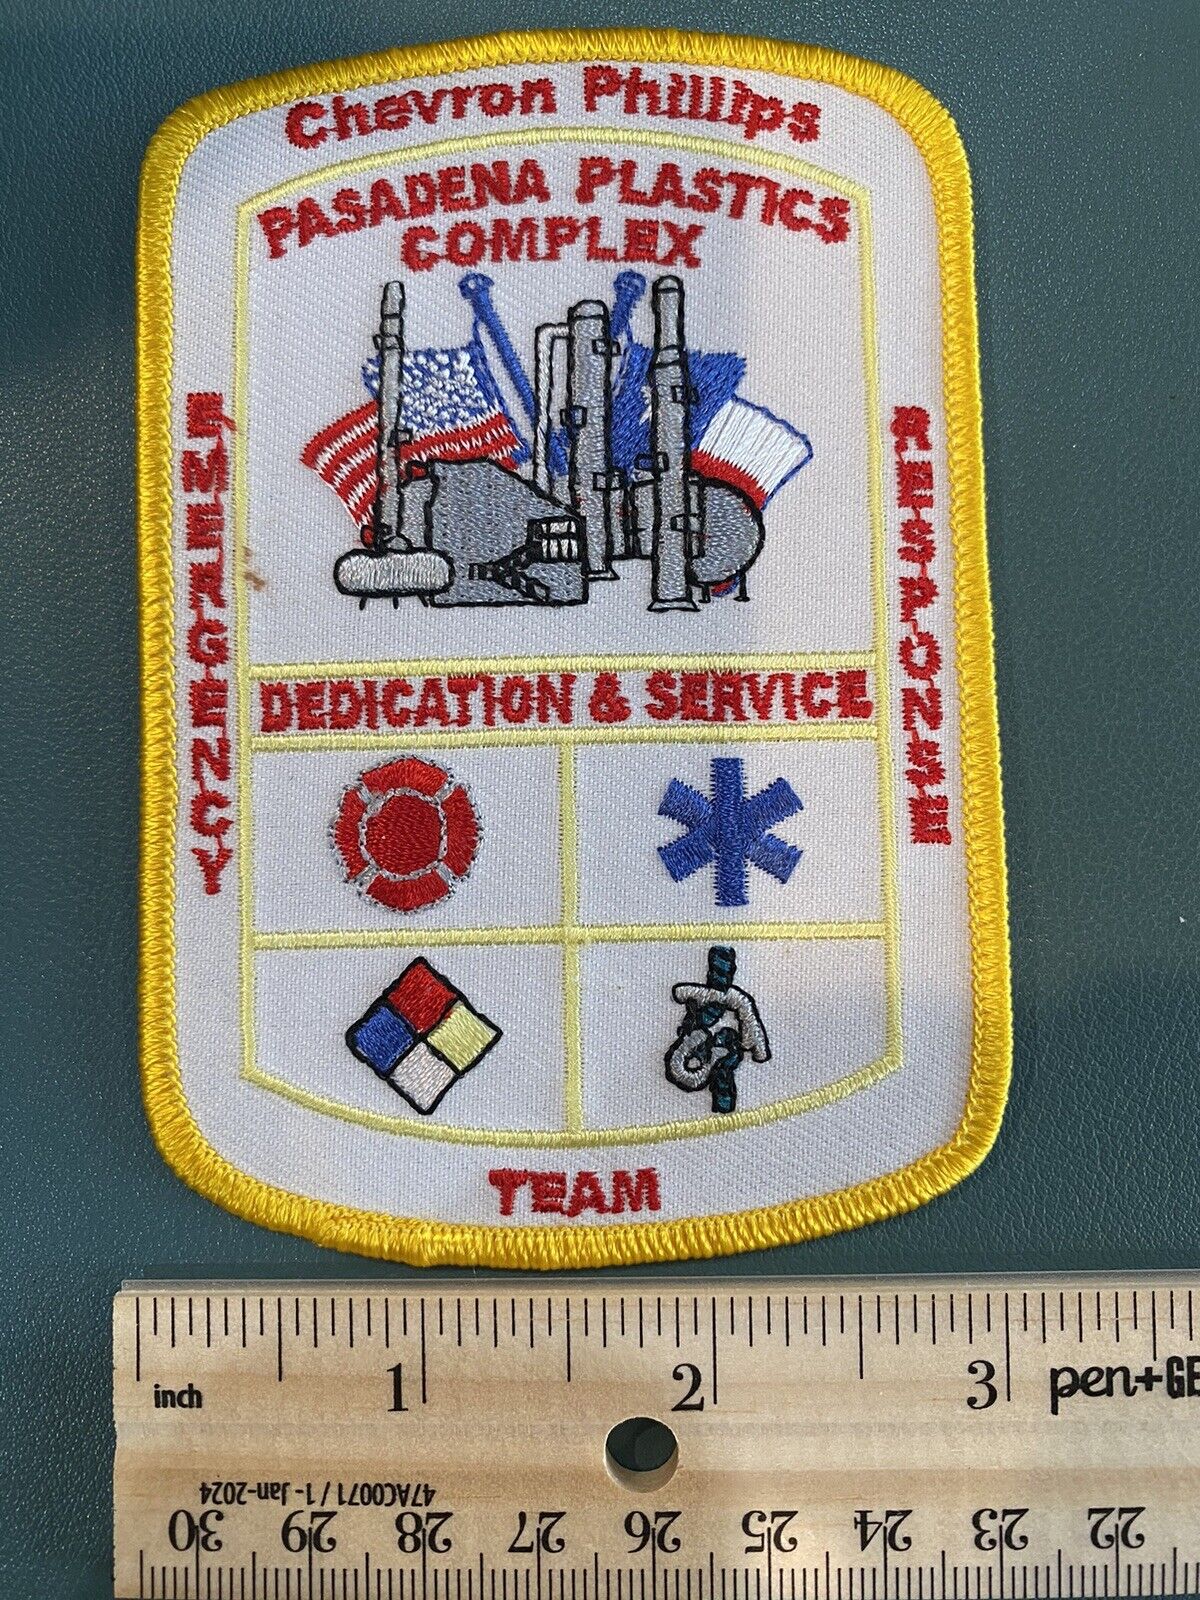 Chevron Phillips Emergency Response Team Dedication & Service Patch Pasadena TX